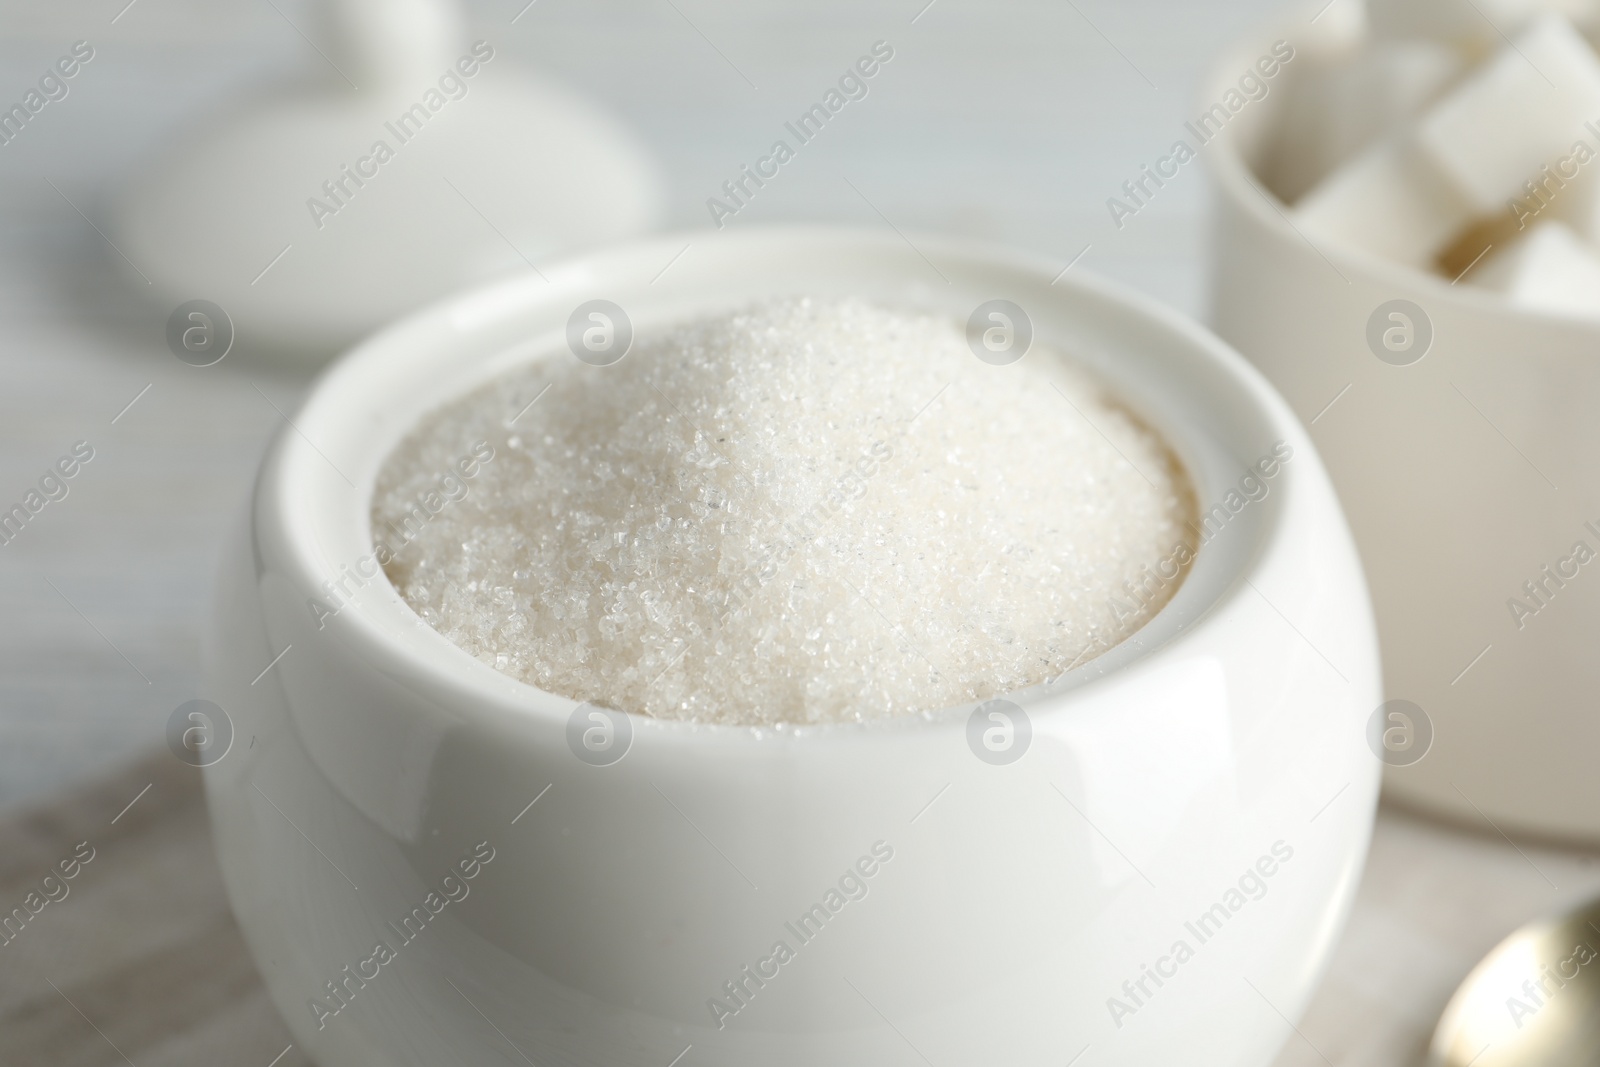 Photo of Ceramic bowl with white sugar, closeup view